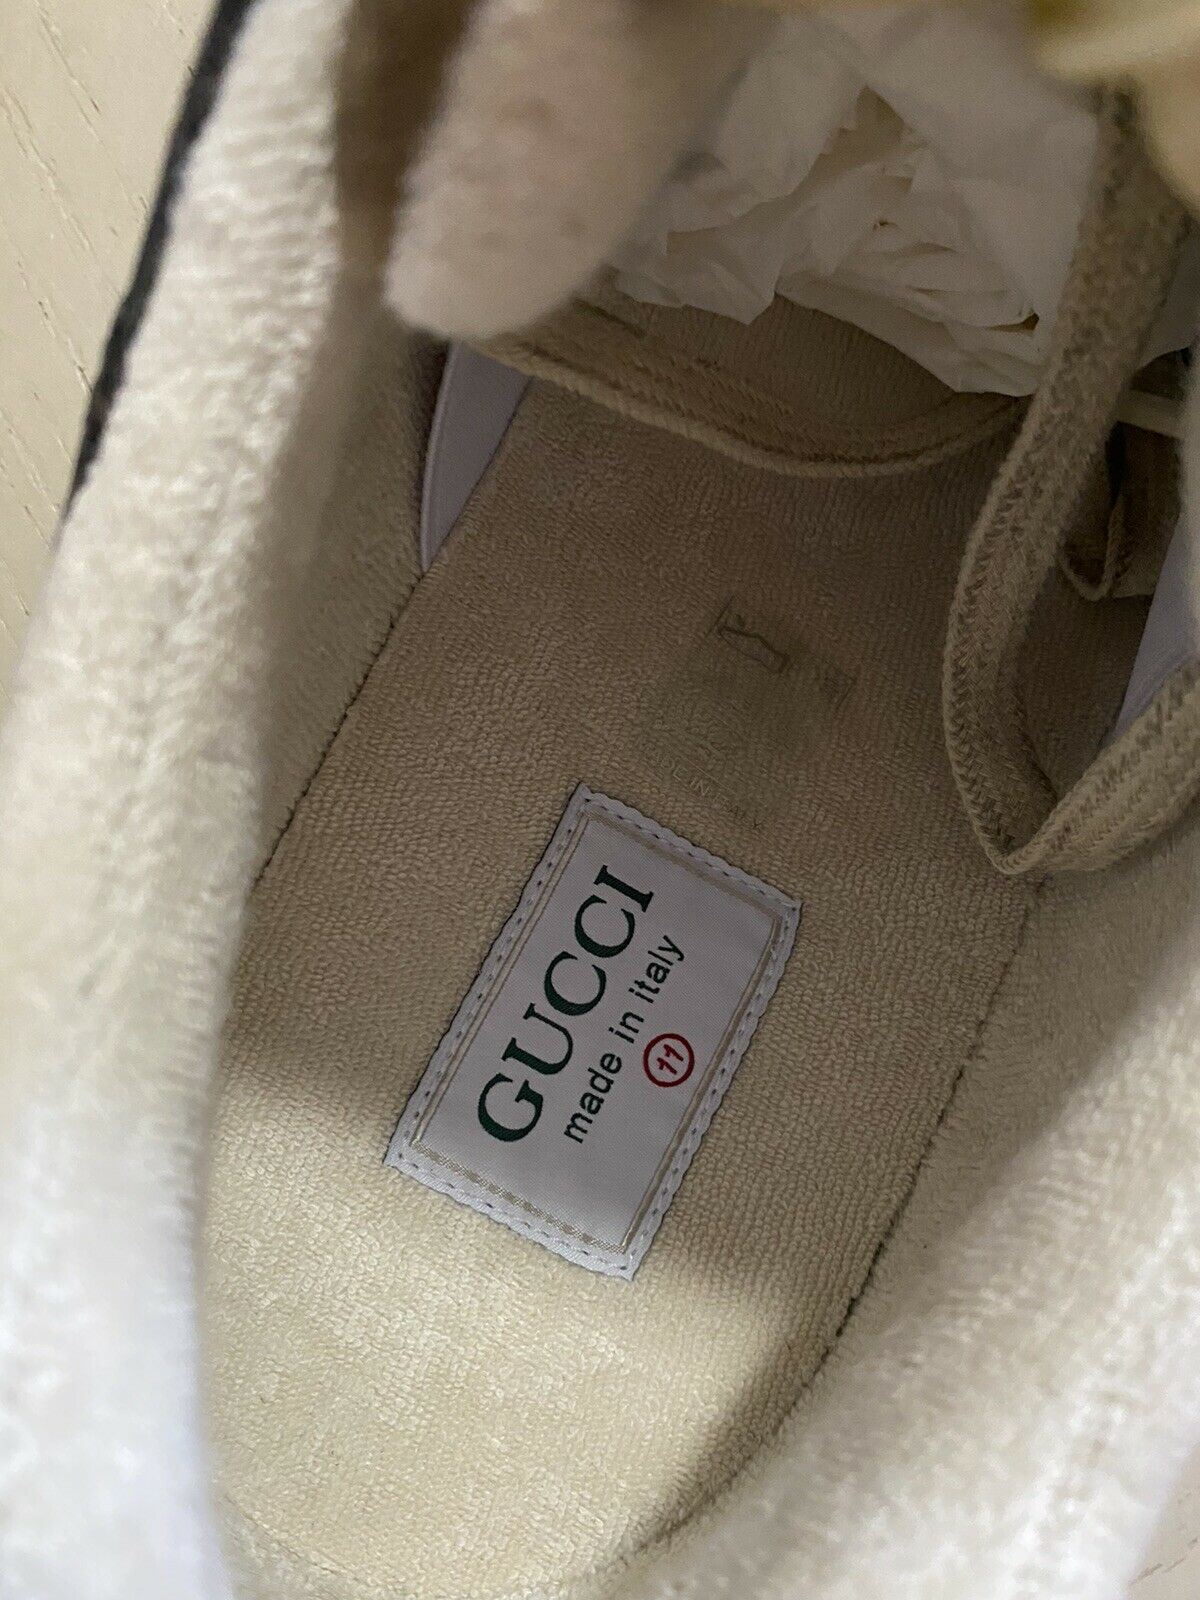 Neue Gucci Herren-Sneakers aus Leder, Braun/Grau/Beige, 12 US (11 UK), Italien